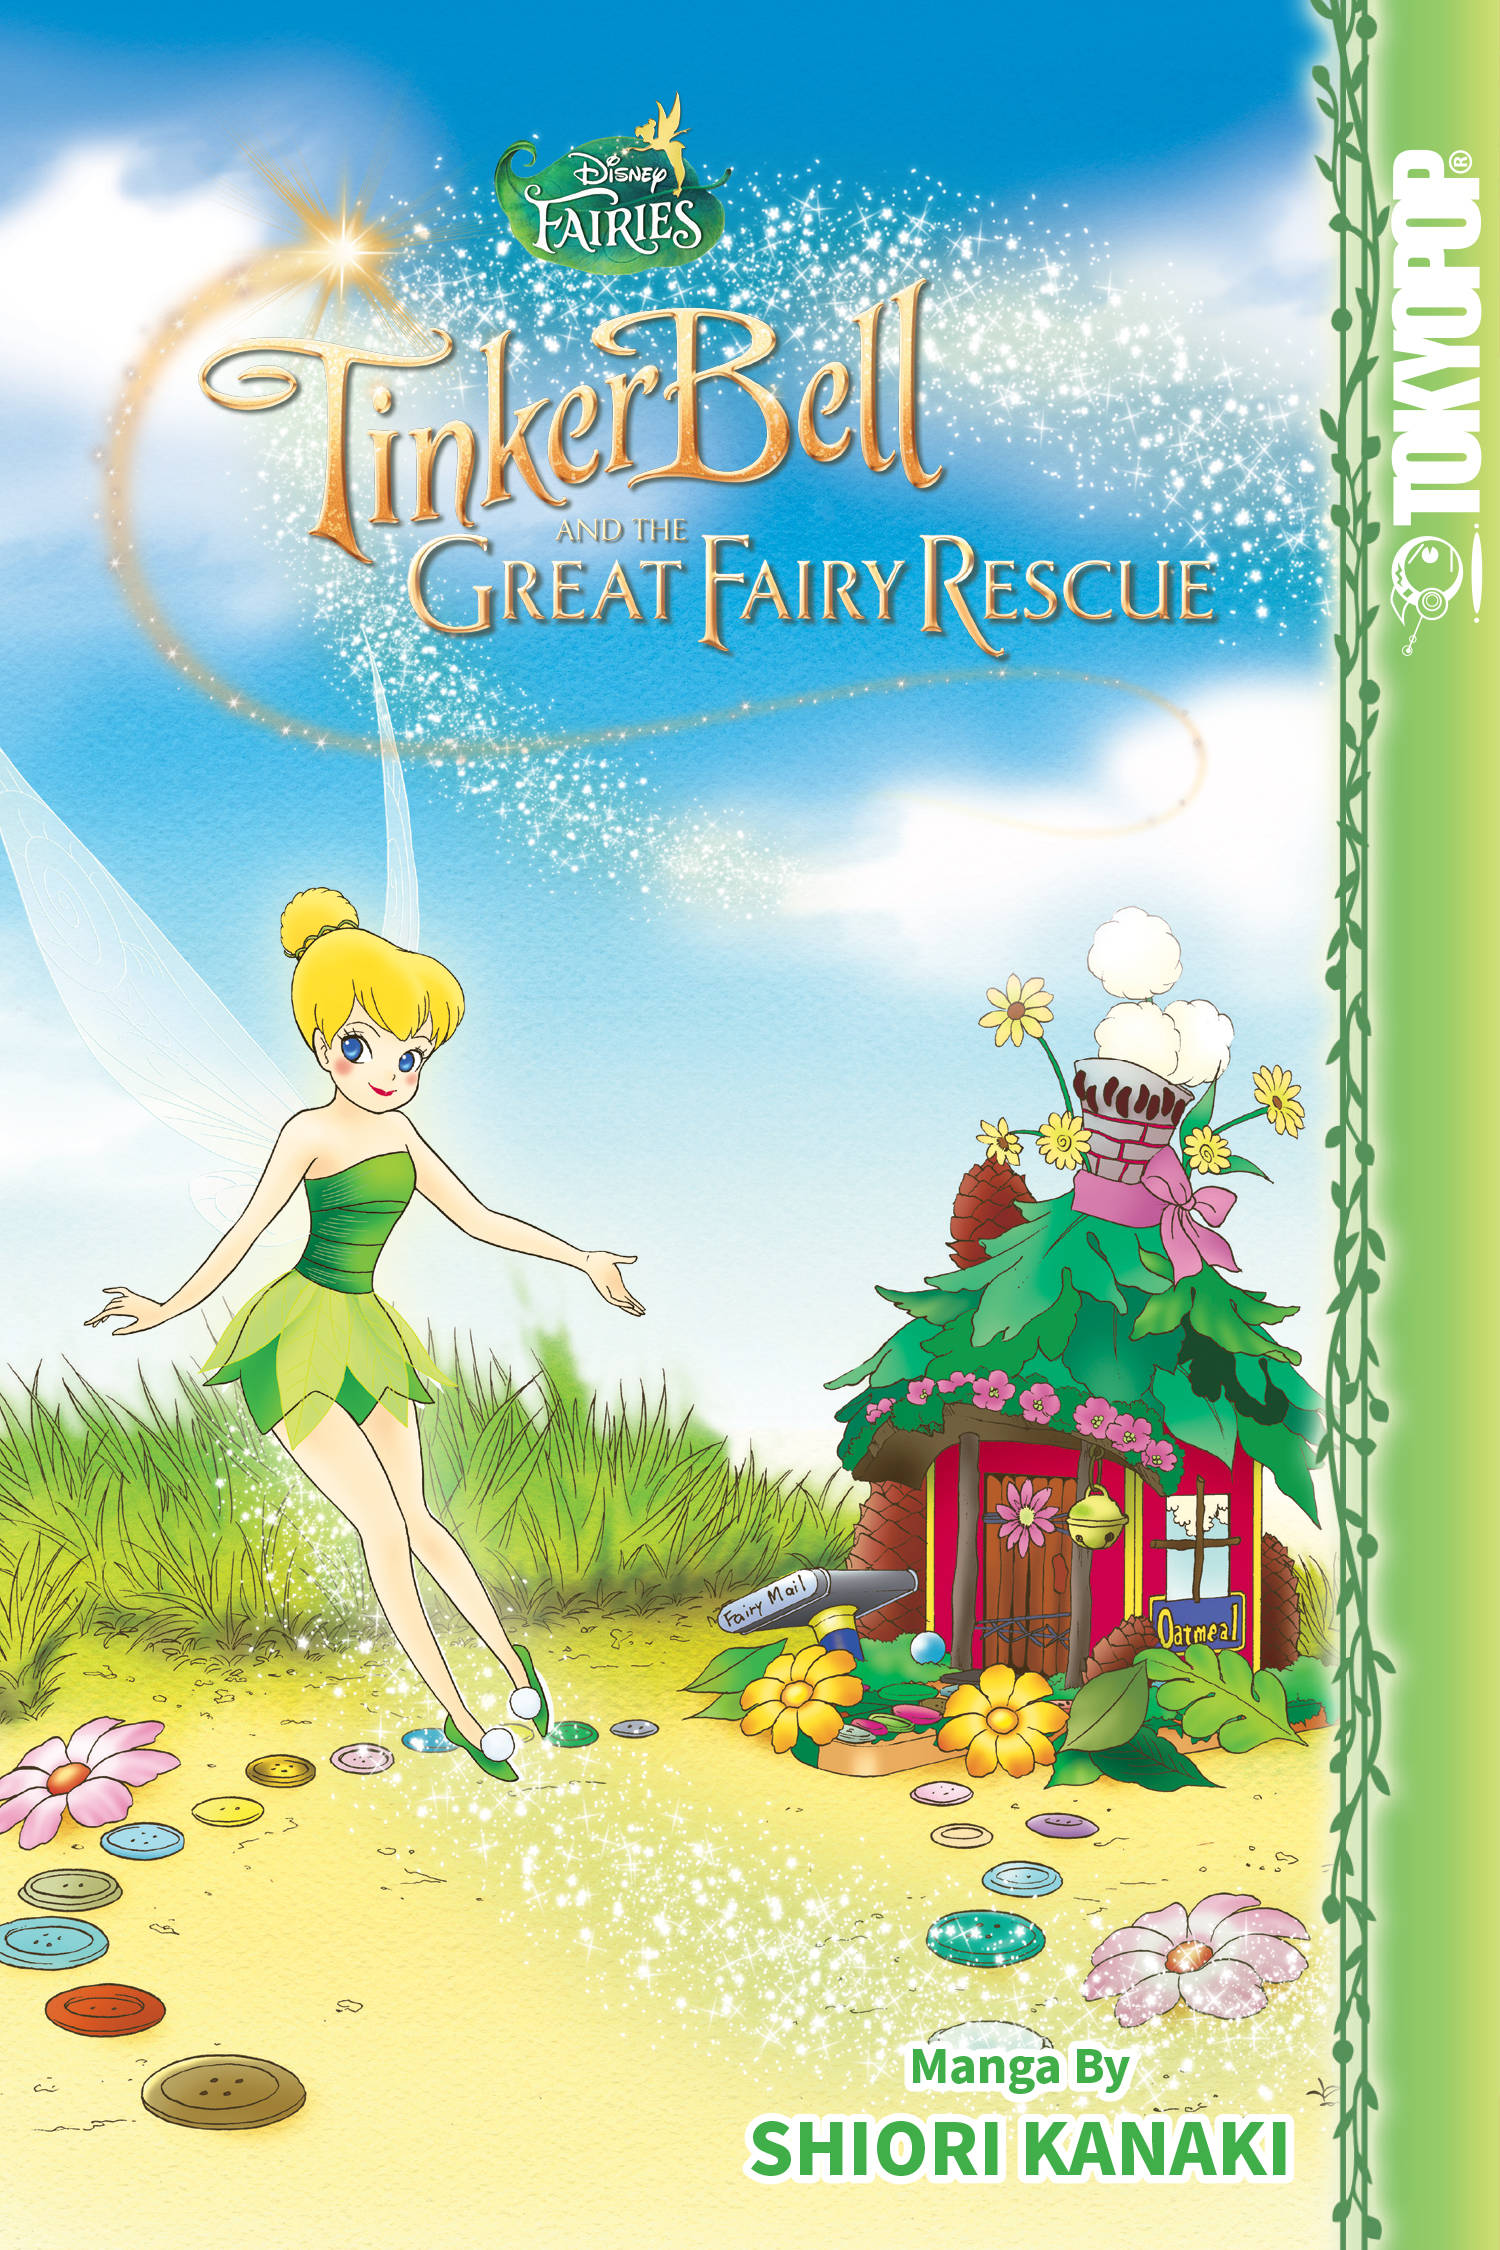 Disney Fairies Manga Manga Volume 5 Great Fairy Rescue